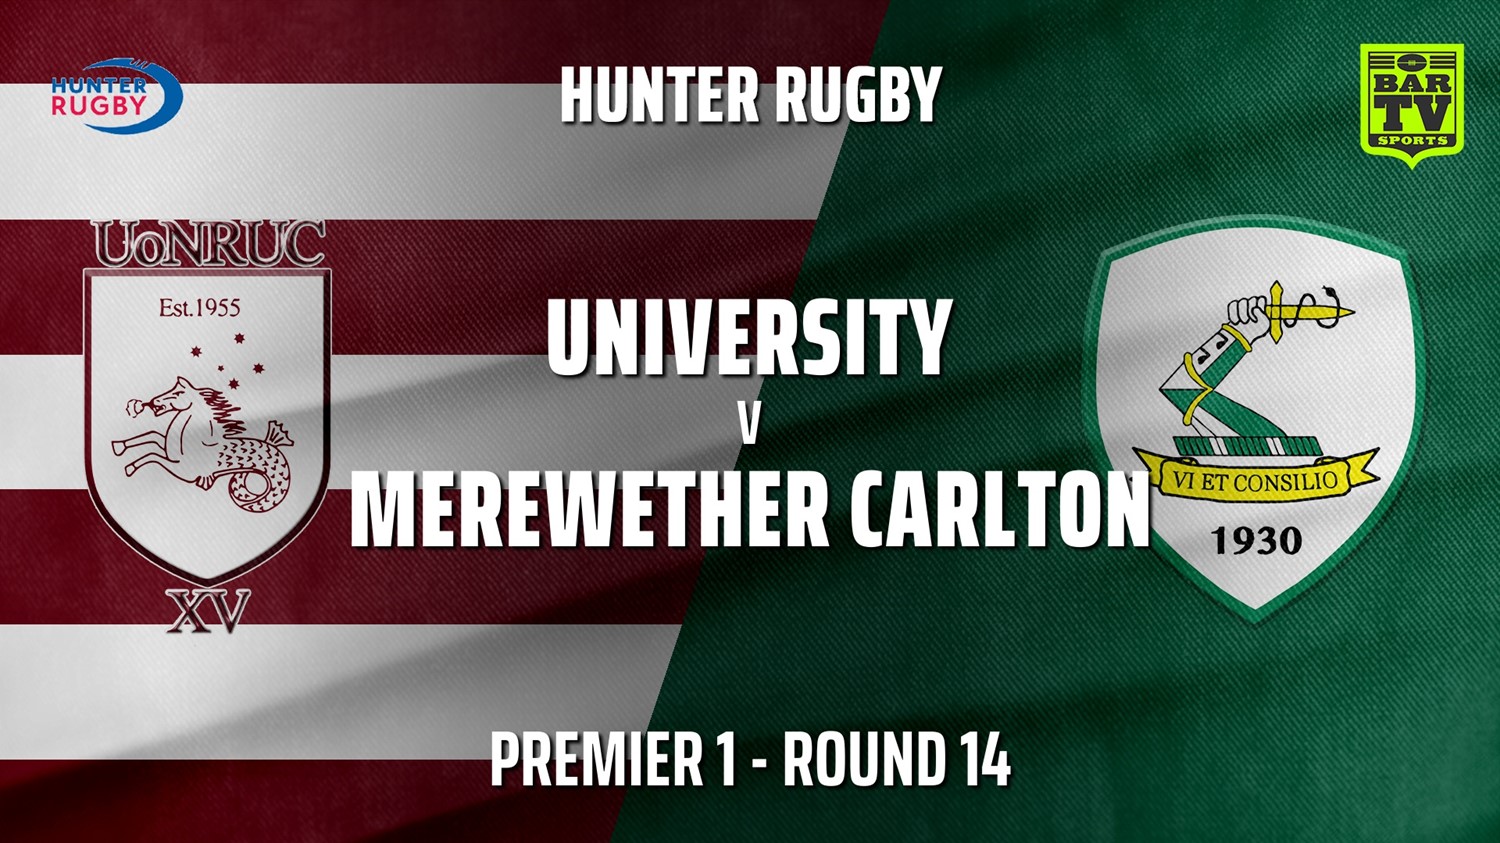 210724-Hunter Rugby Round 14 - Premier 1 - University Of Newcastle v Merewether Carlton Slate Image